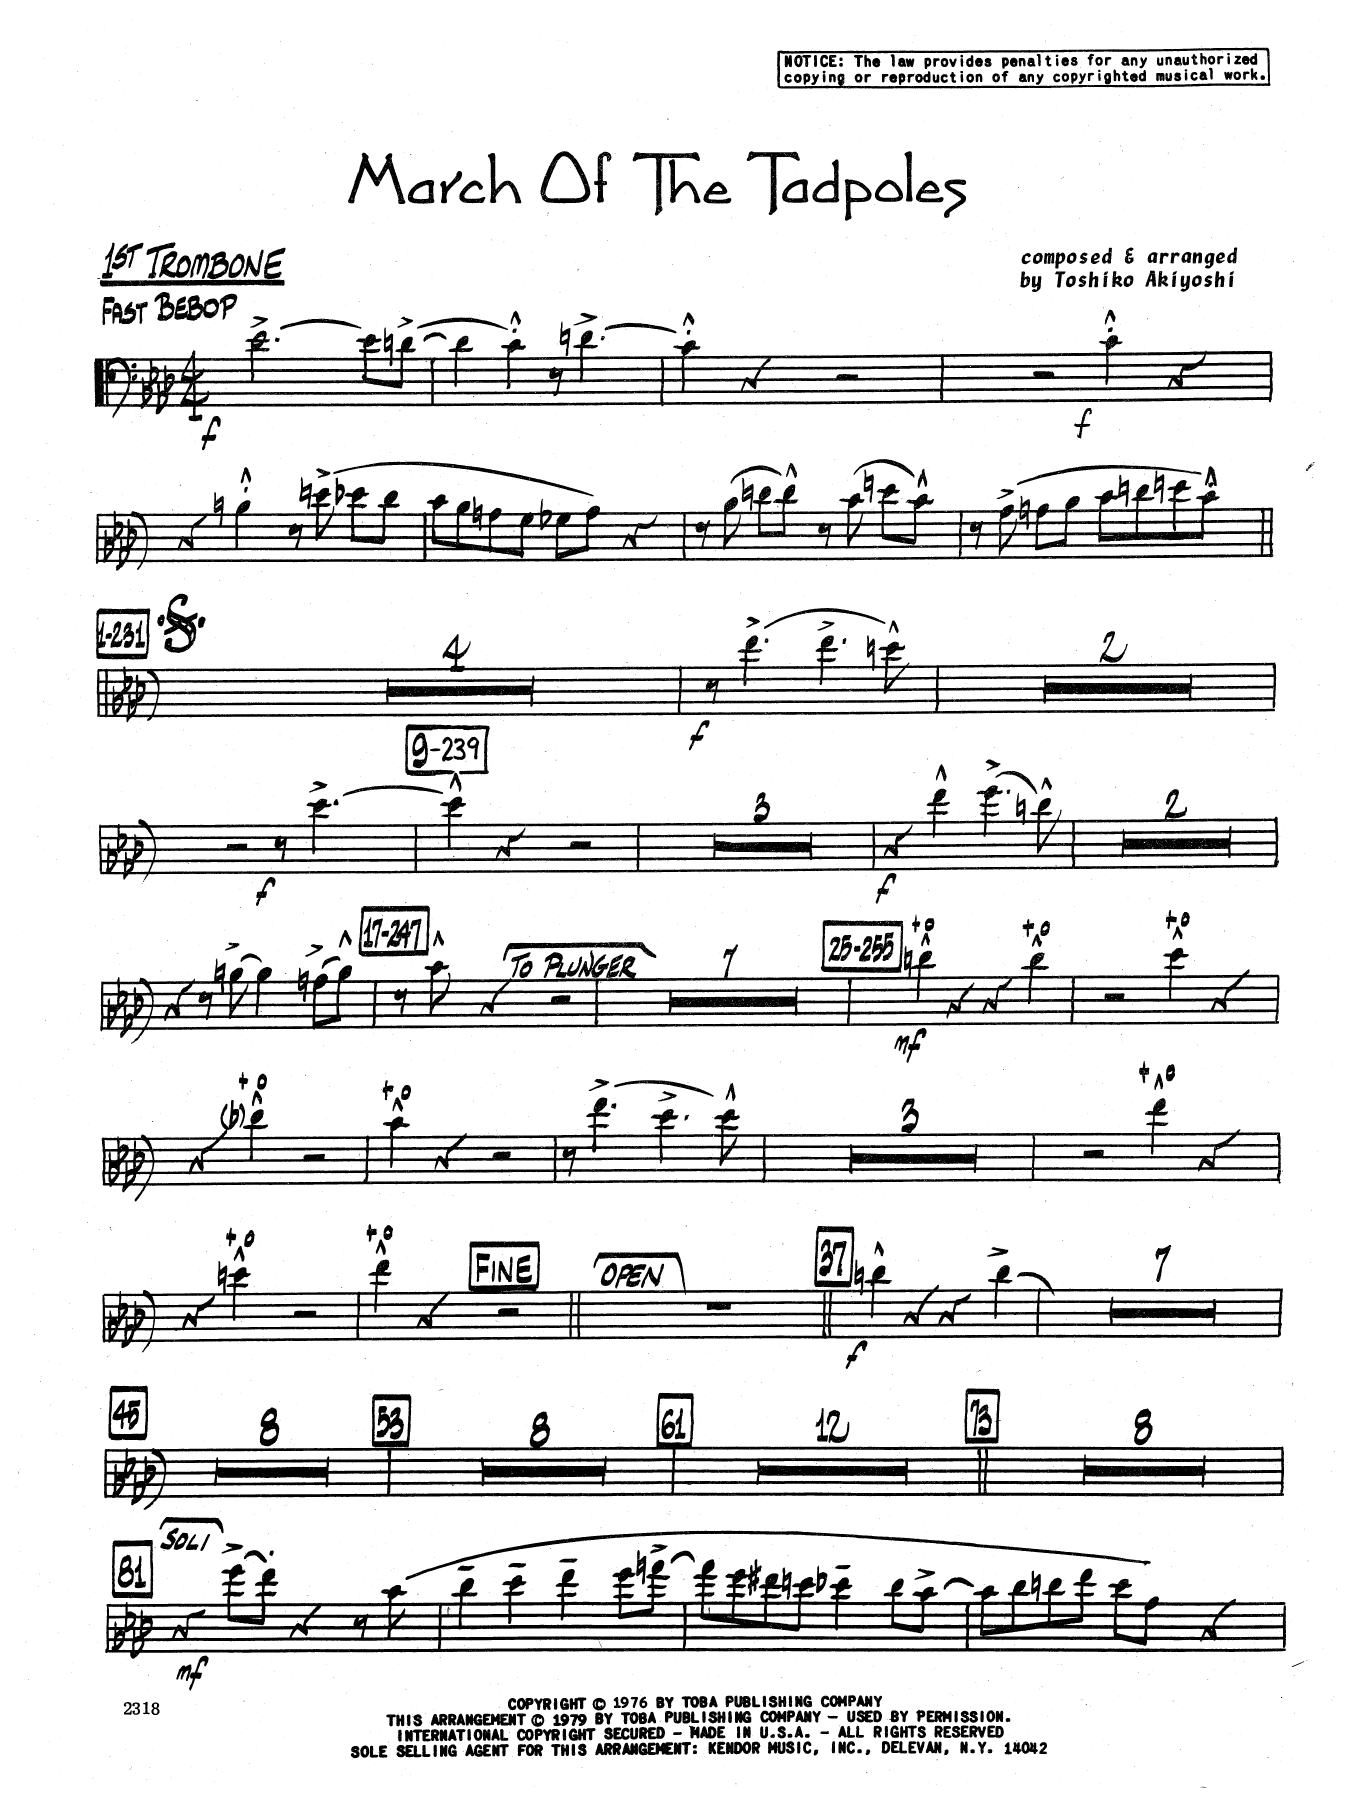 Download Toshiko Akiyoshi March Of The Tadpoles - 1st Trombone Sheet Music